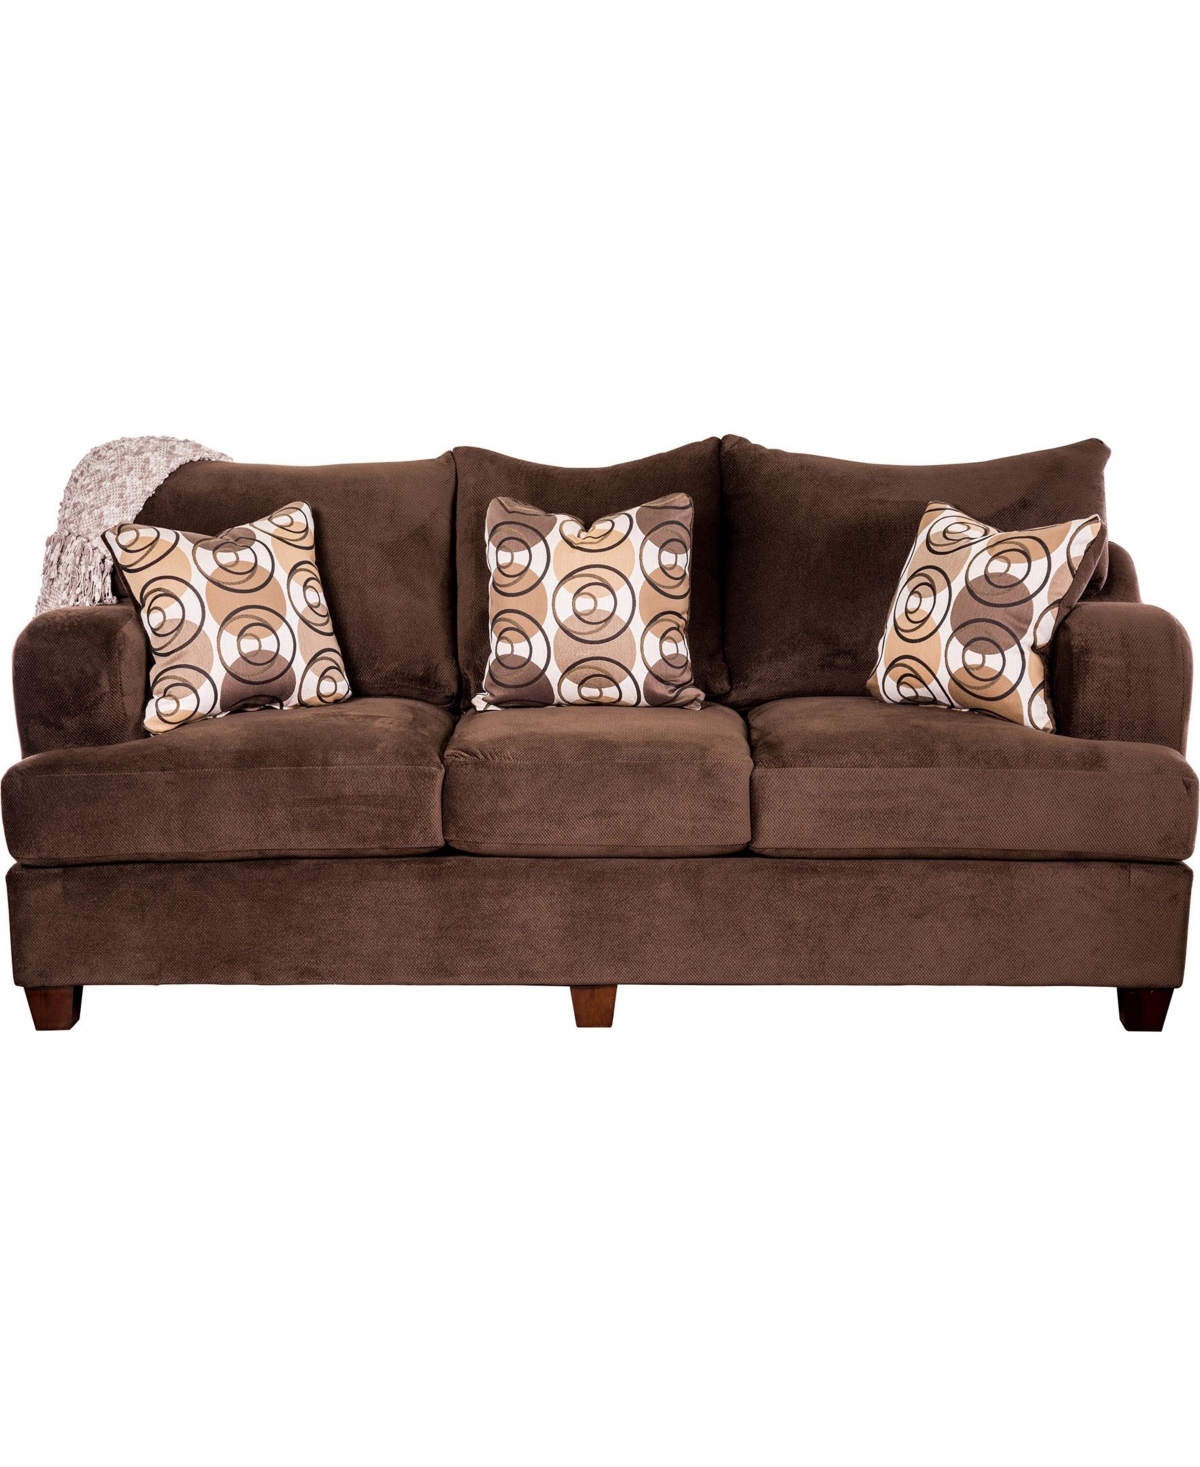 of America Jayme Upholstered Sofa